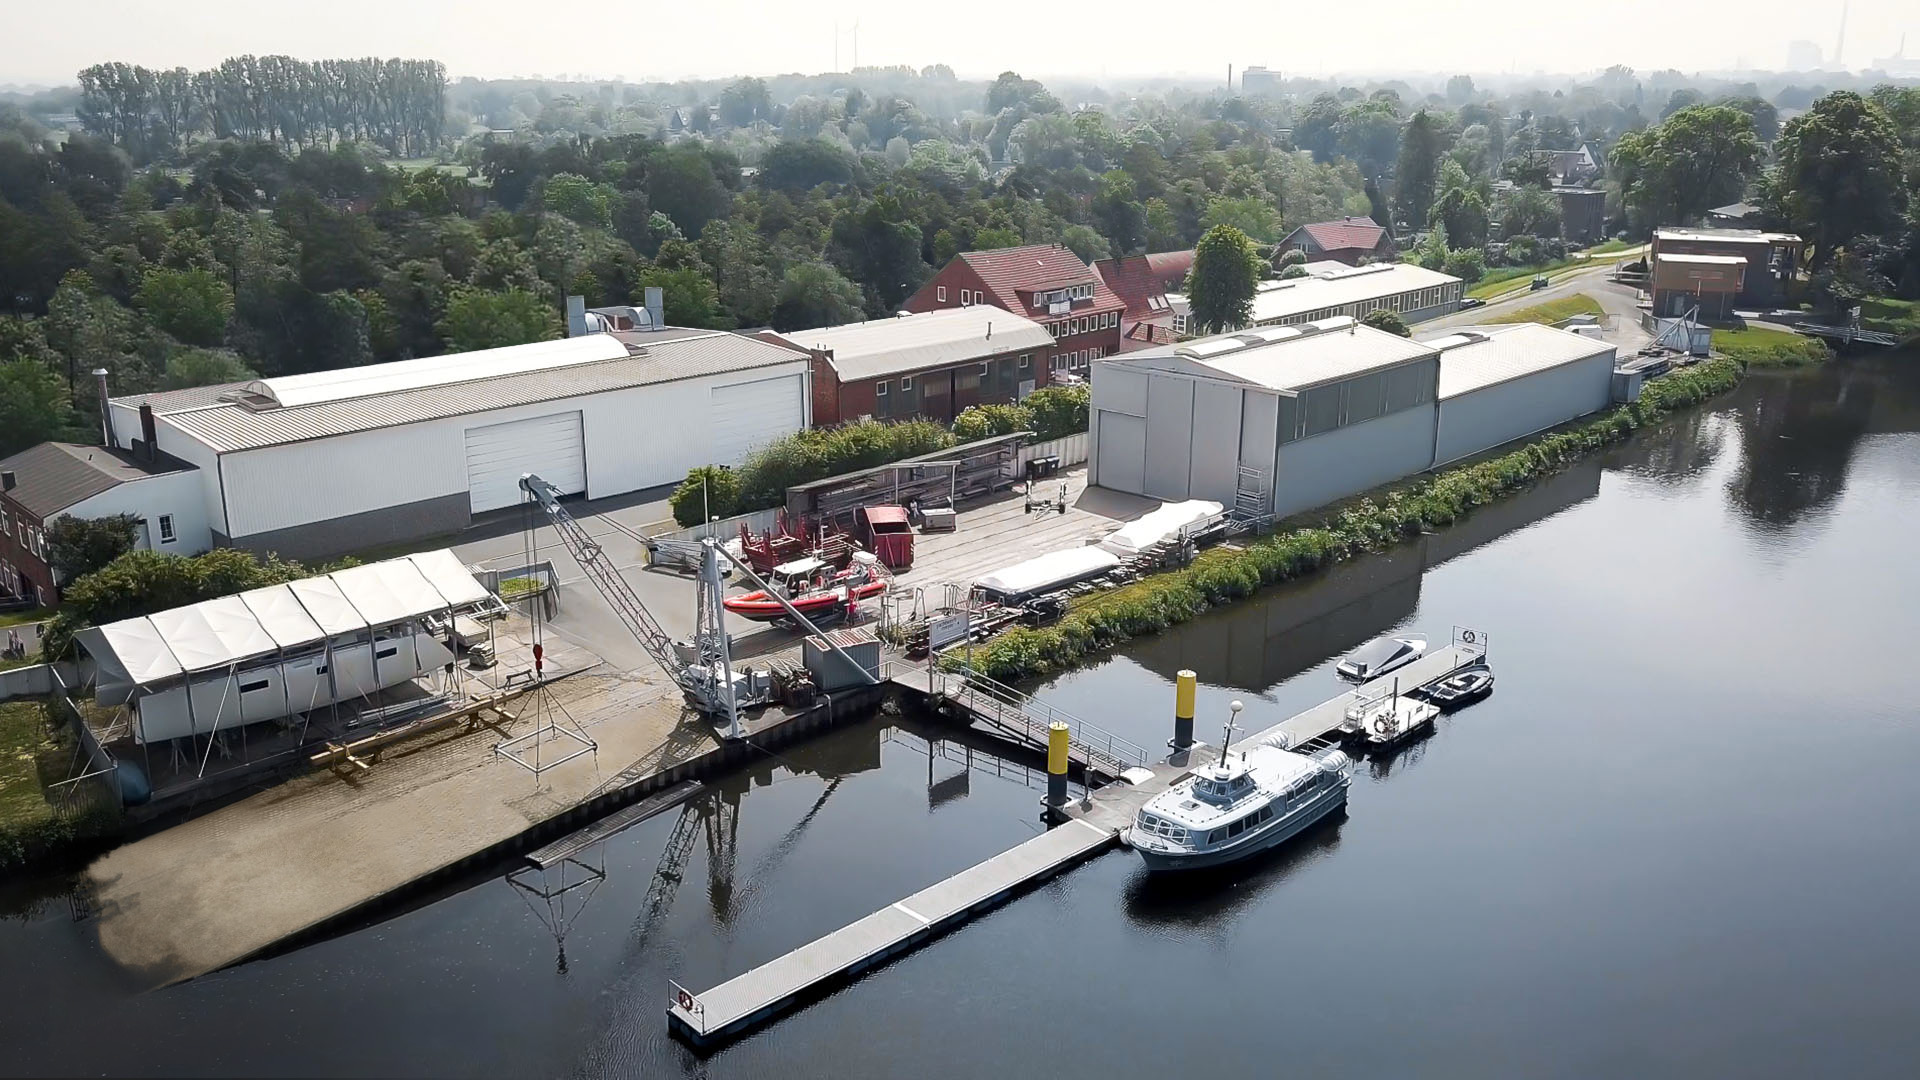 Yachtwerft Meyer Shipyard About Us